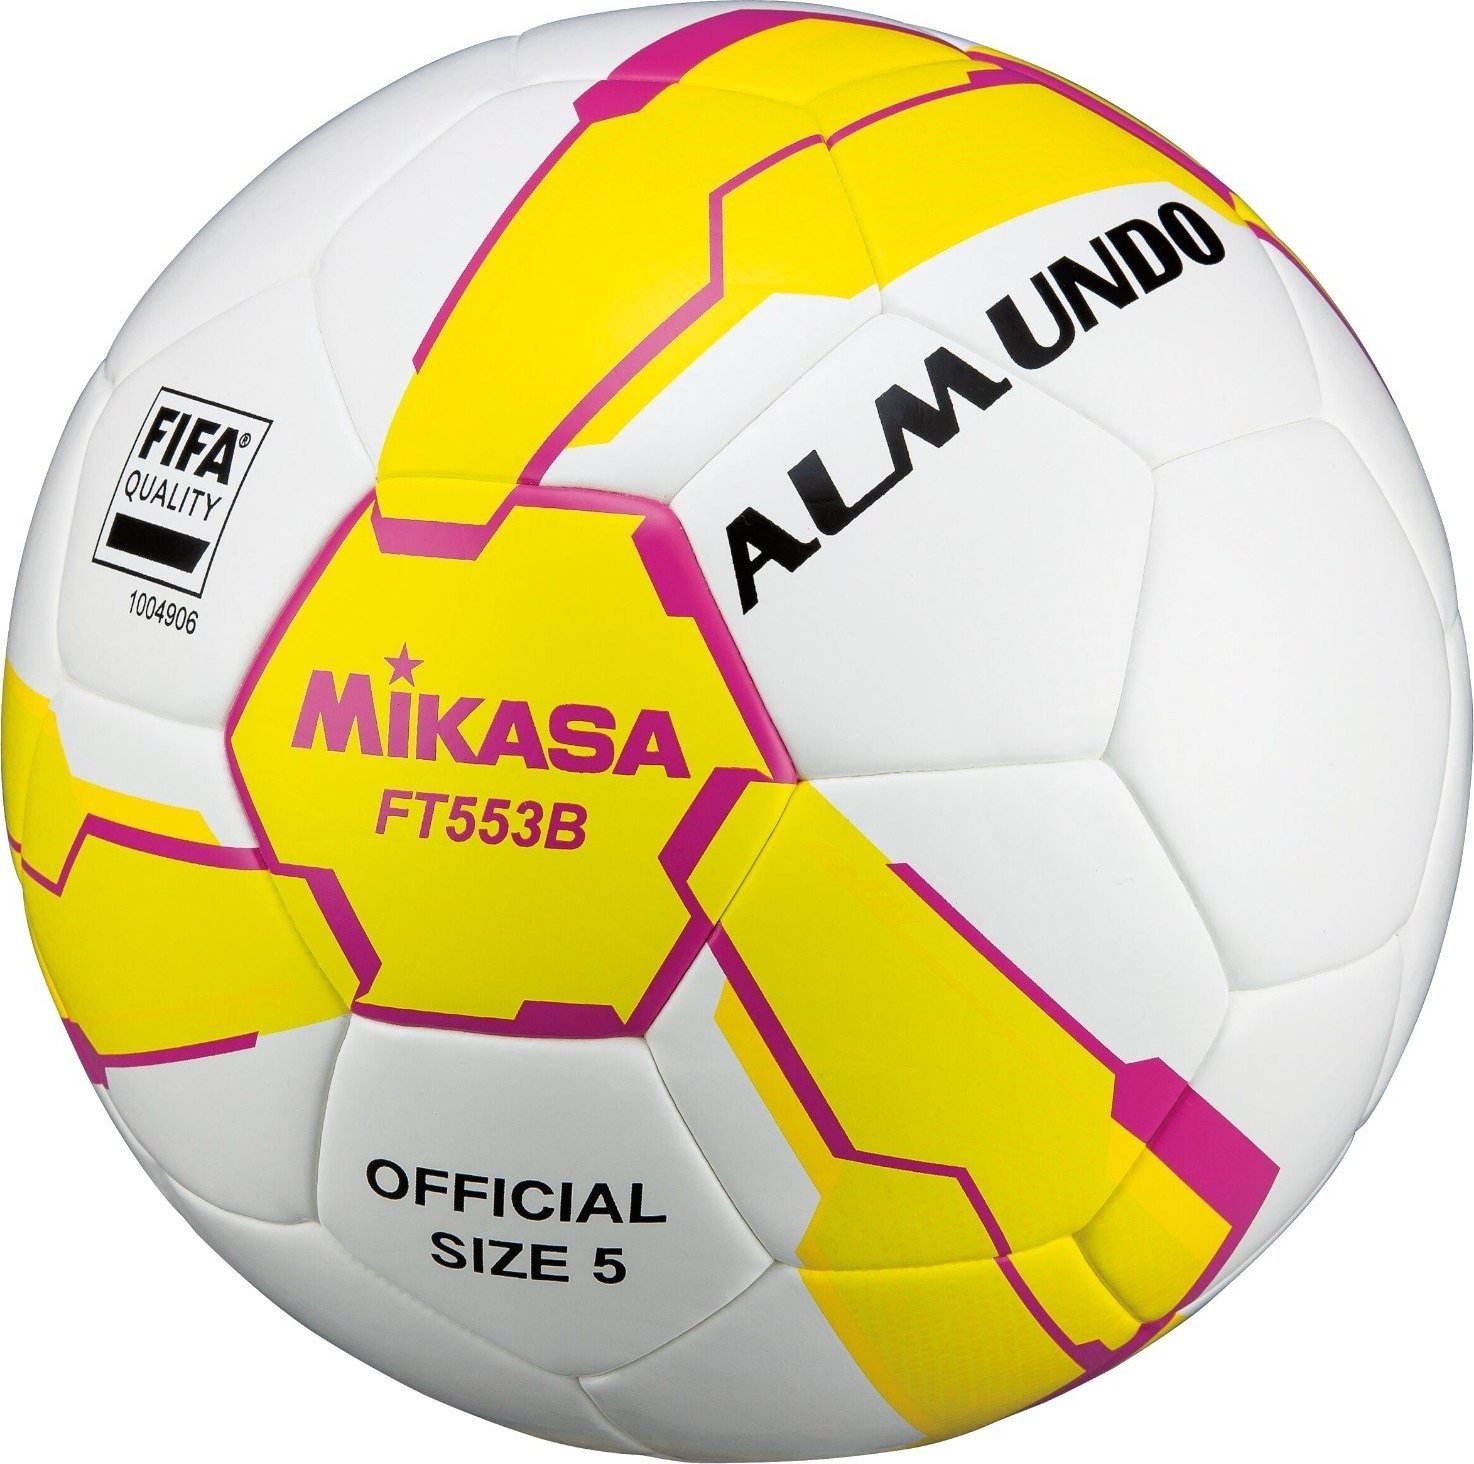 Mikasa Mikasa FT553B-YP FIFA Quality Ball FT553B biale 5 FT553B (4907225841721) bumba